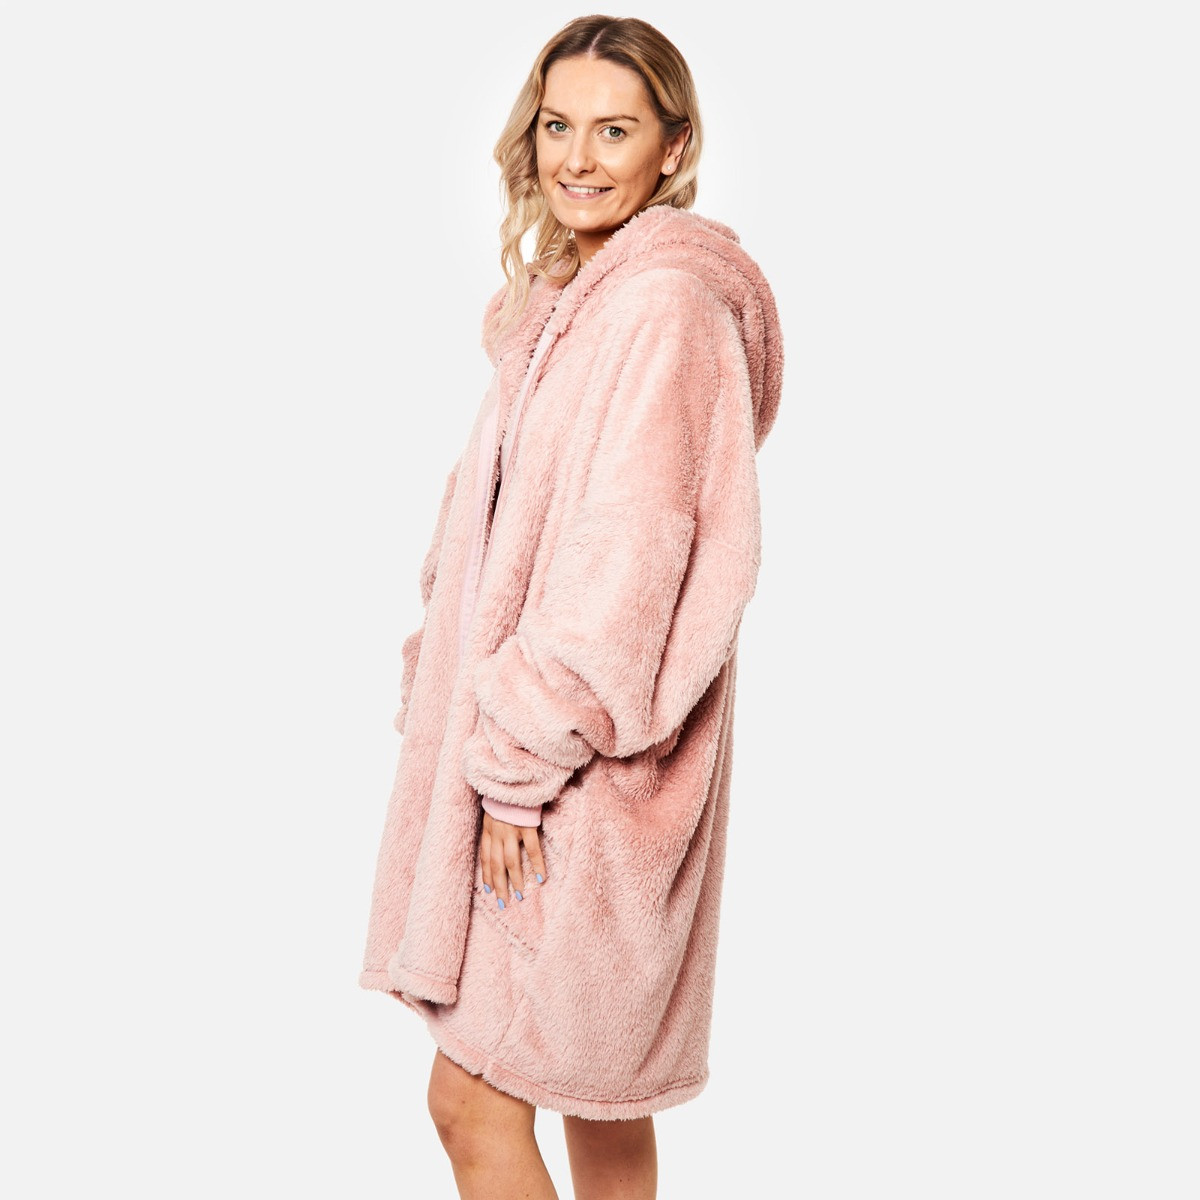 Brentfords Teddy Fleece Zip Up Hoodie Blanket, Blush Pink - One Size